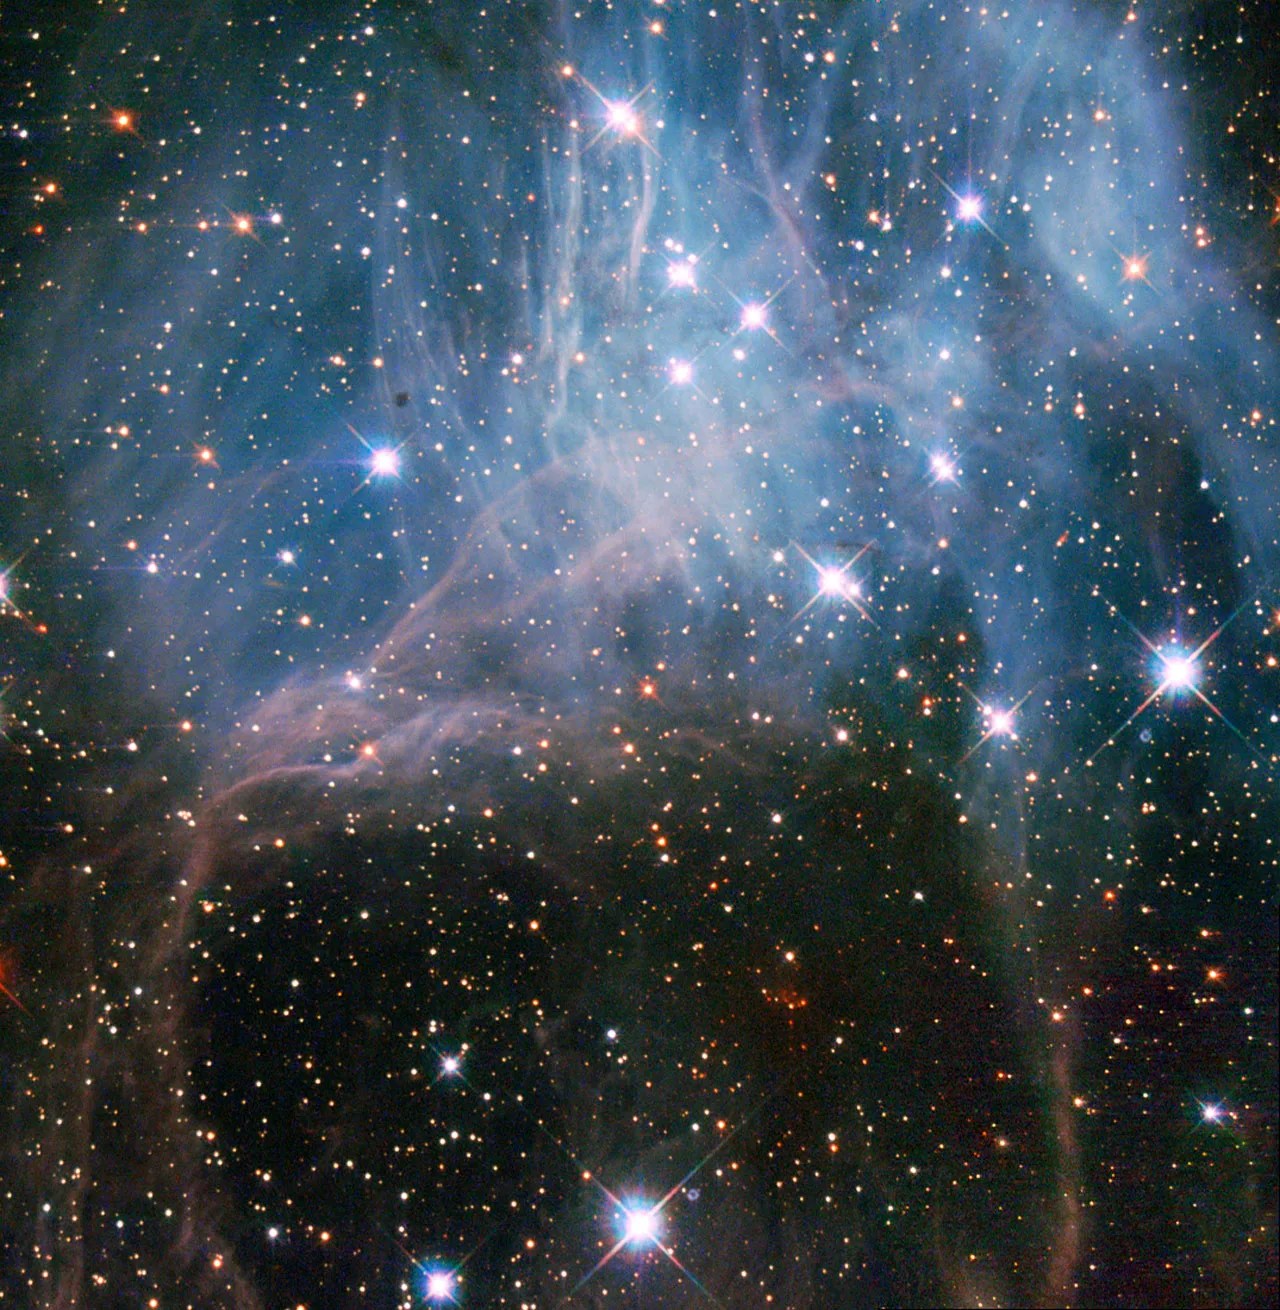 stars peer through a blue/lavender haze in NGC 2040